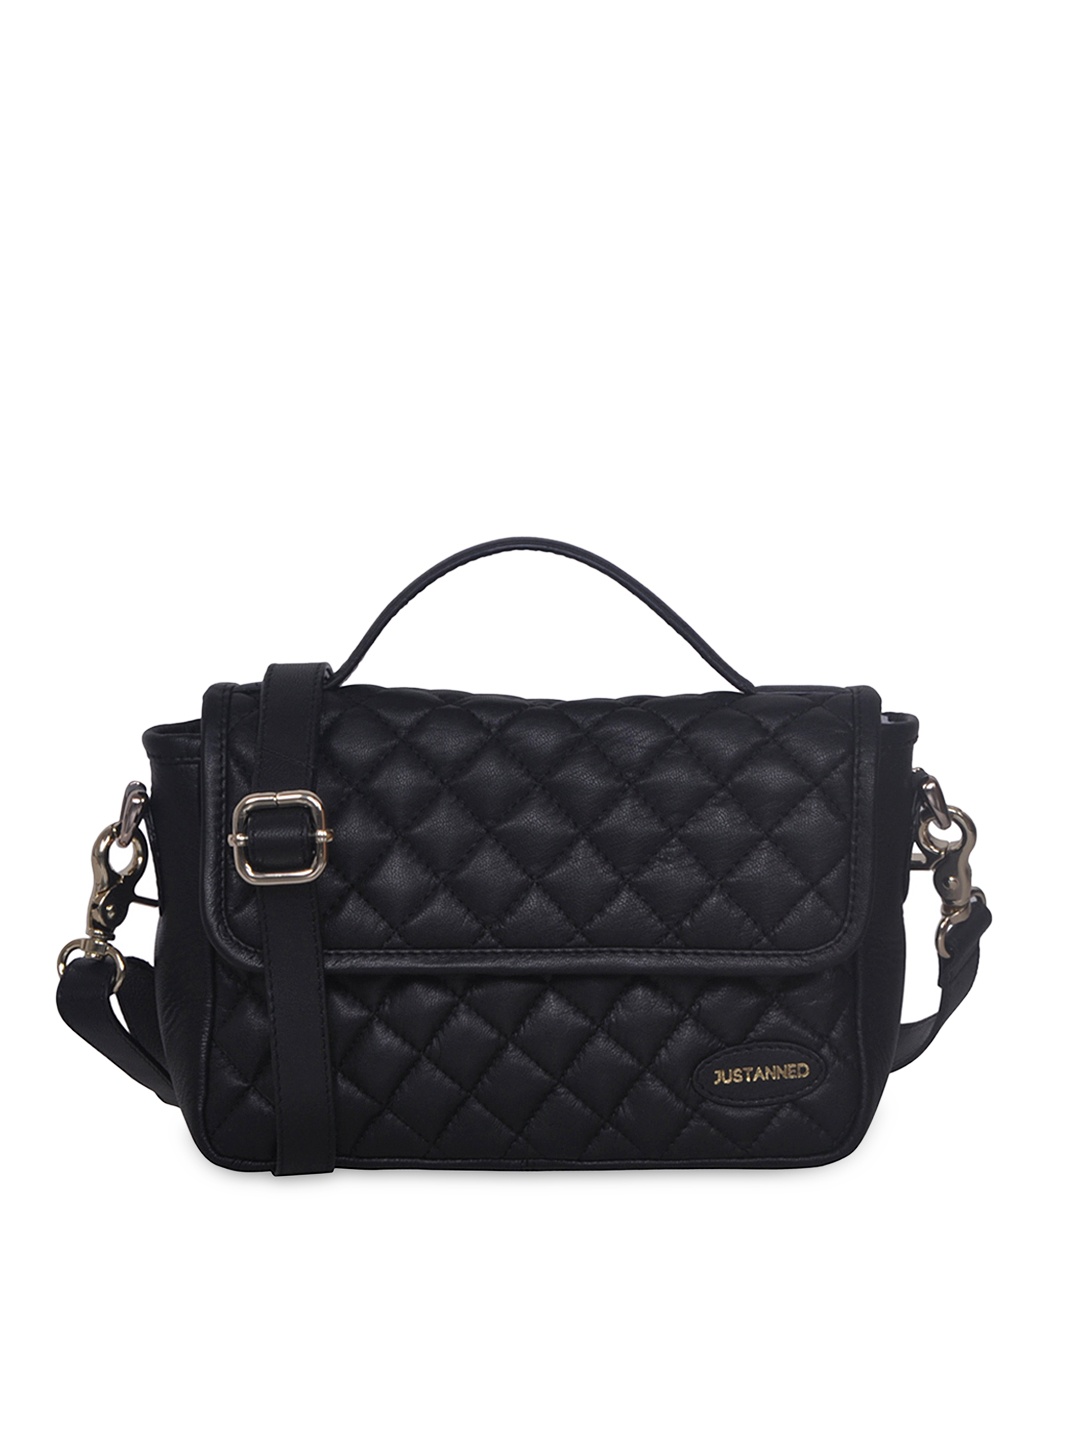 Myntra Justanned Women Black Leather Sling Bag 609675 | Buy Myntra Justanned Handbags at best ...